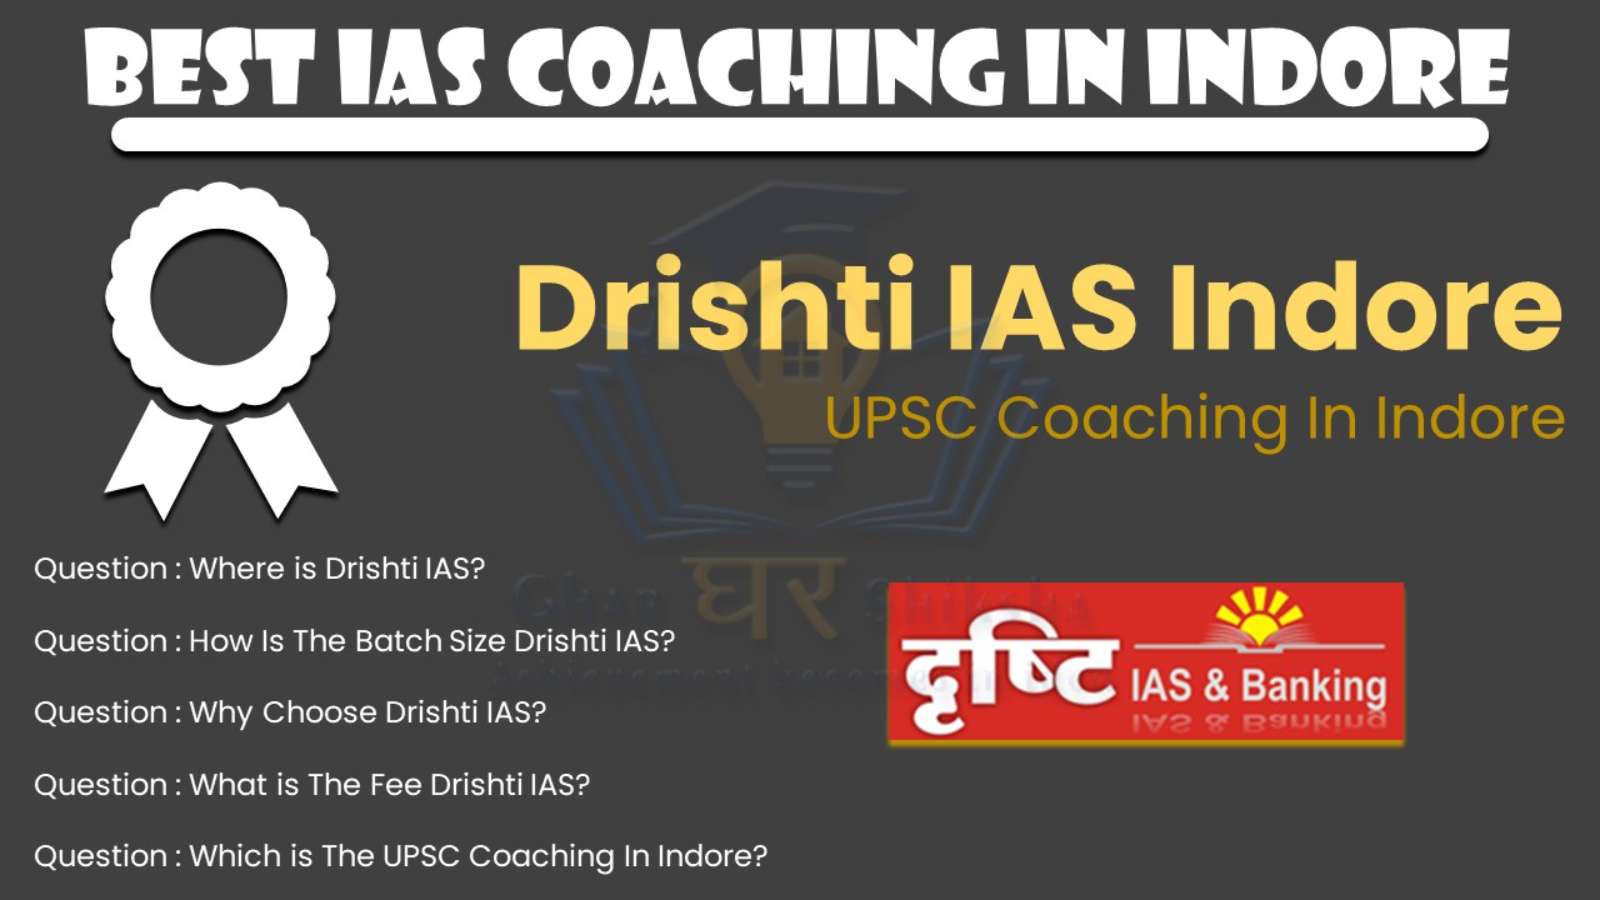 IAS Coaching In Indore